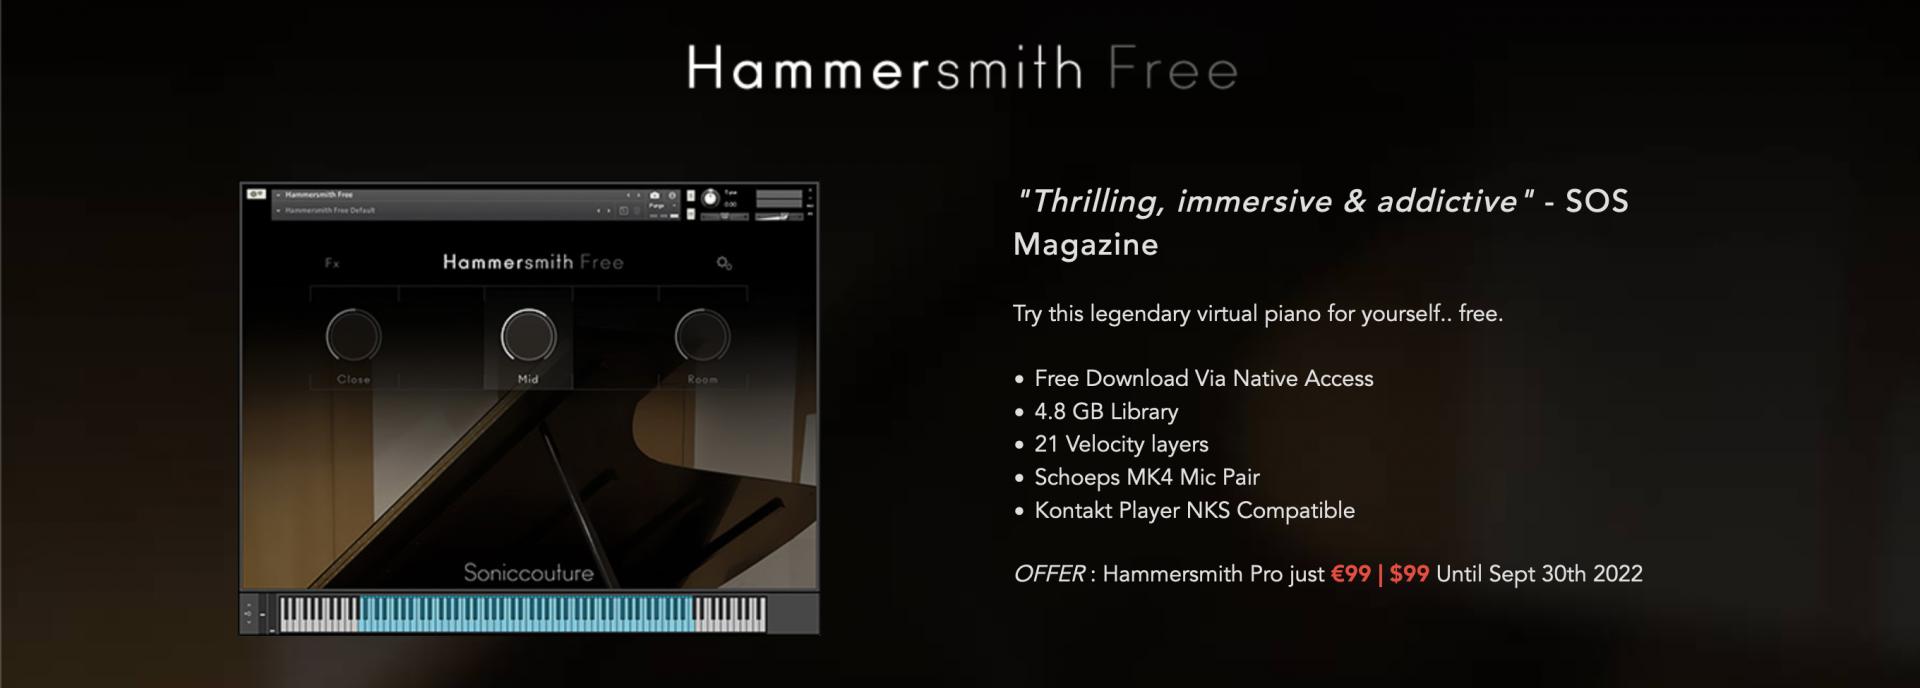 hammersmith_free.png.jpg